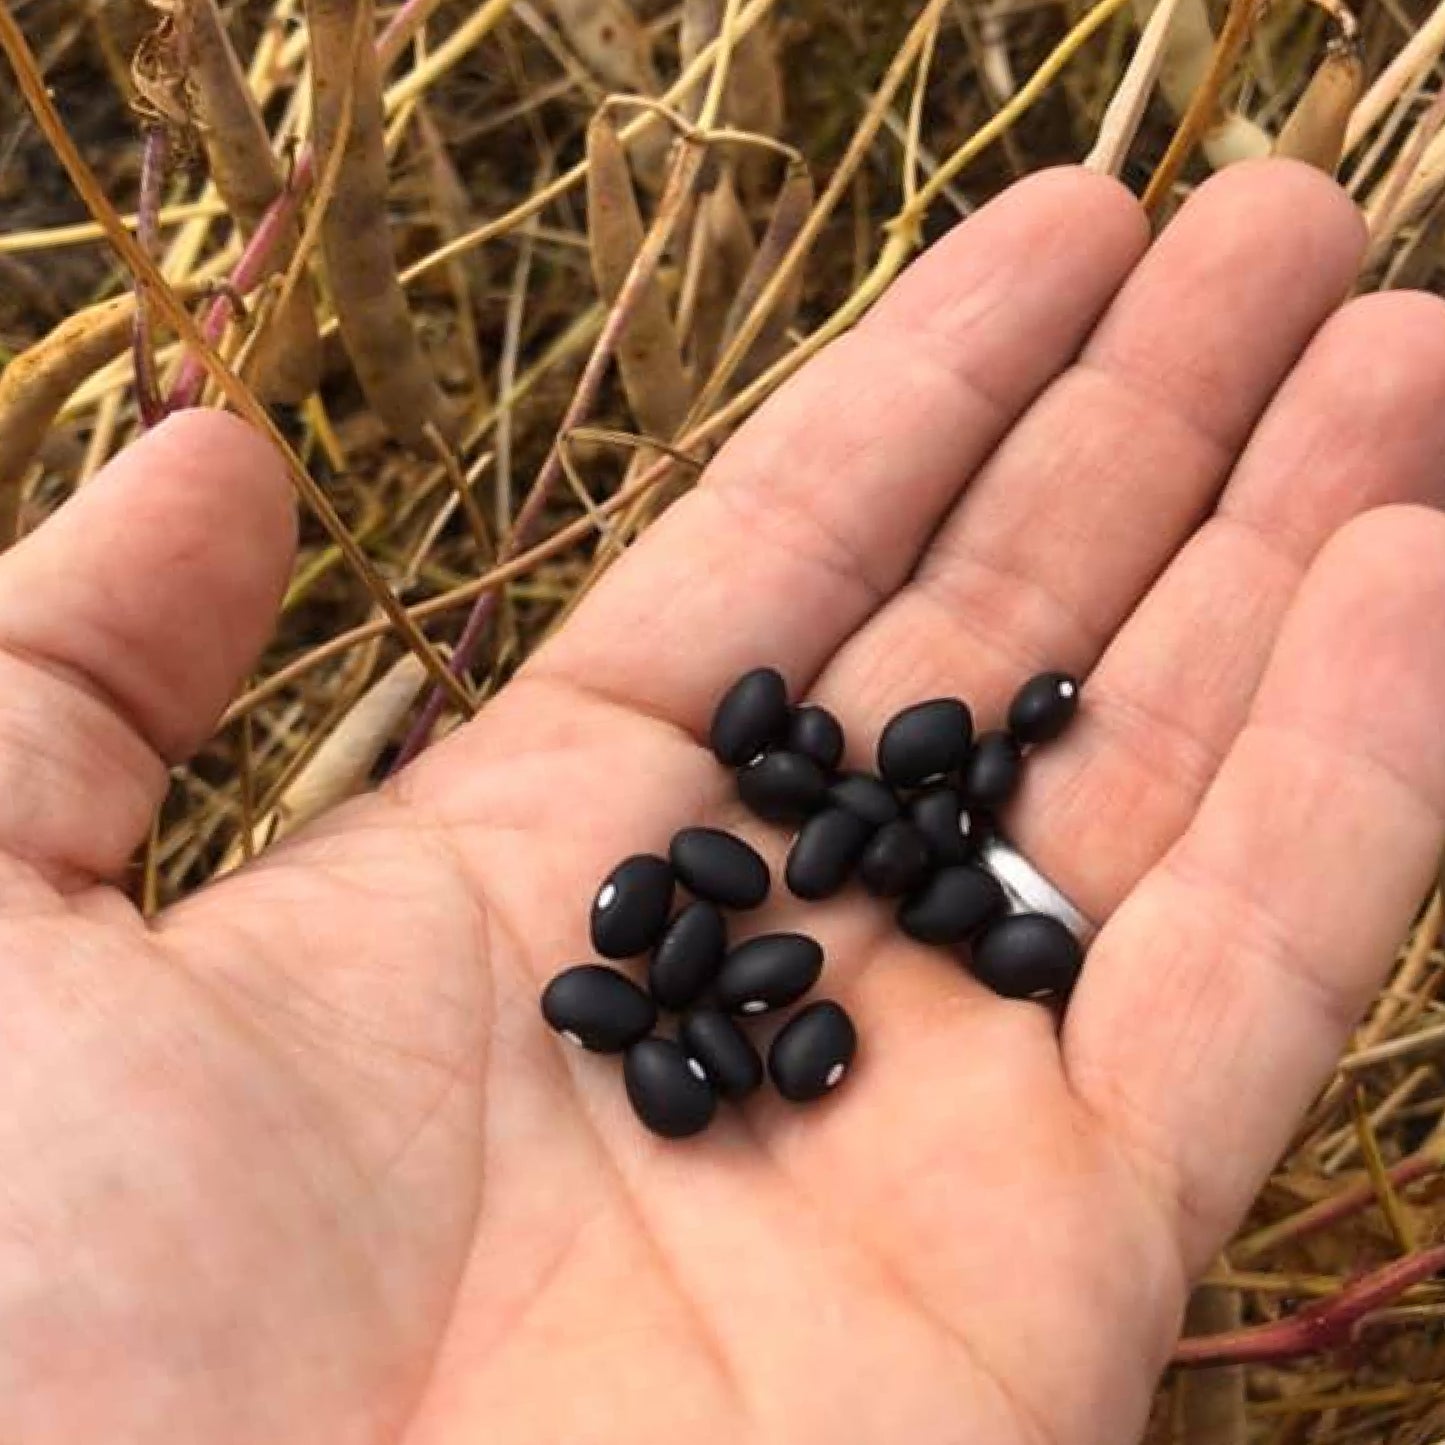 Black Beans // Michigan Grown, USDA Organic Certified, Non-GMO